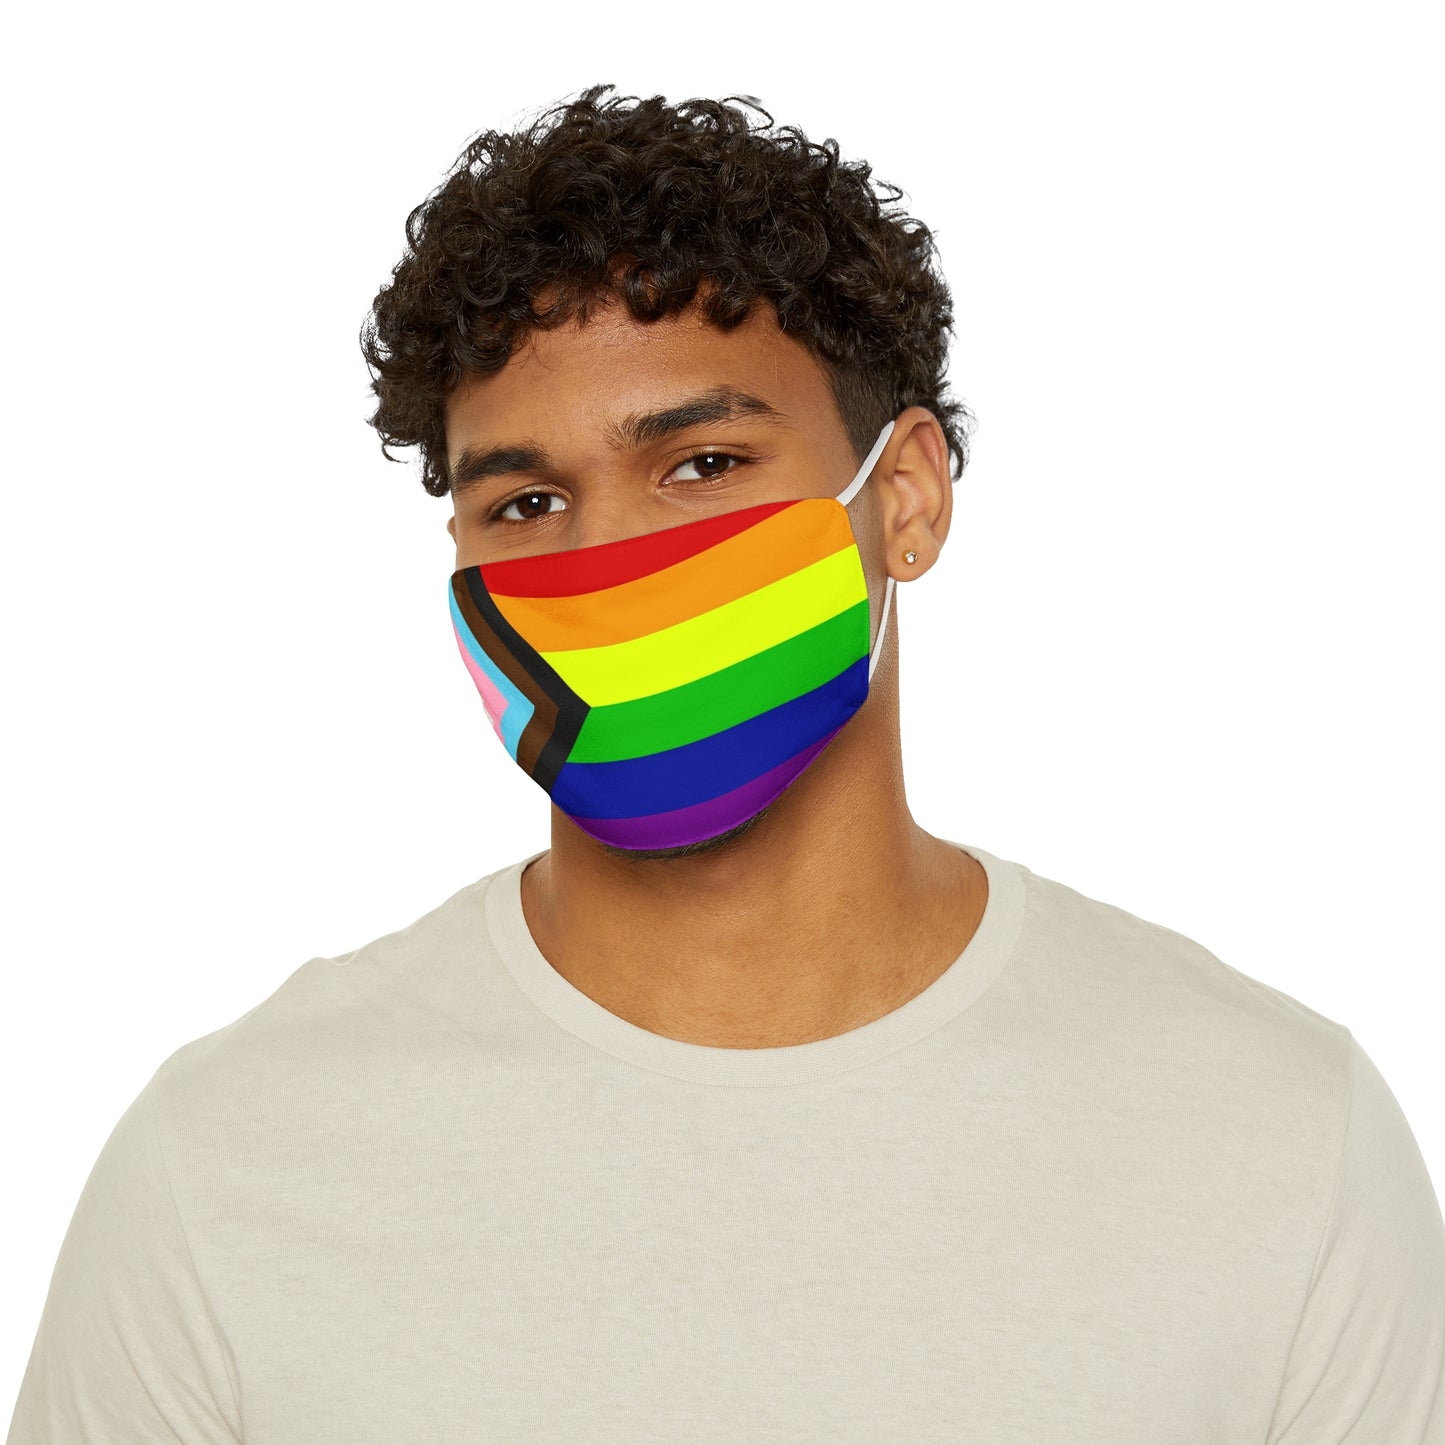 Nouveau masque facial en tissu ajusté Progress Pride LGBTQ